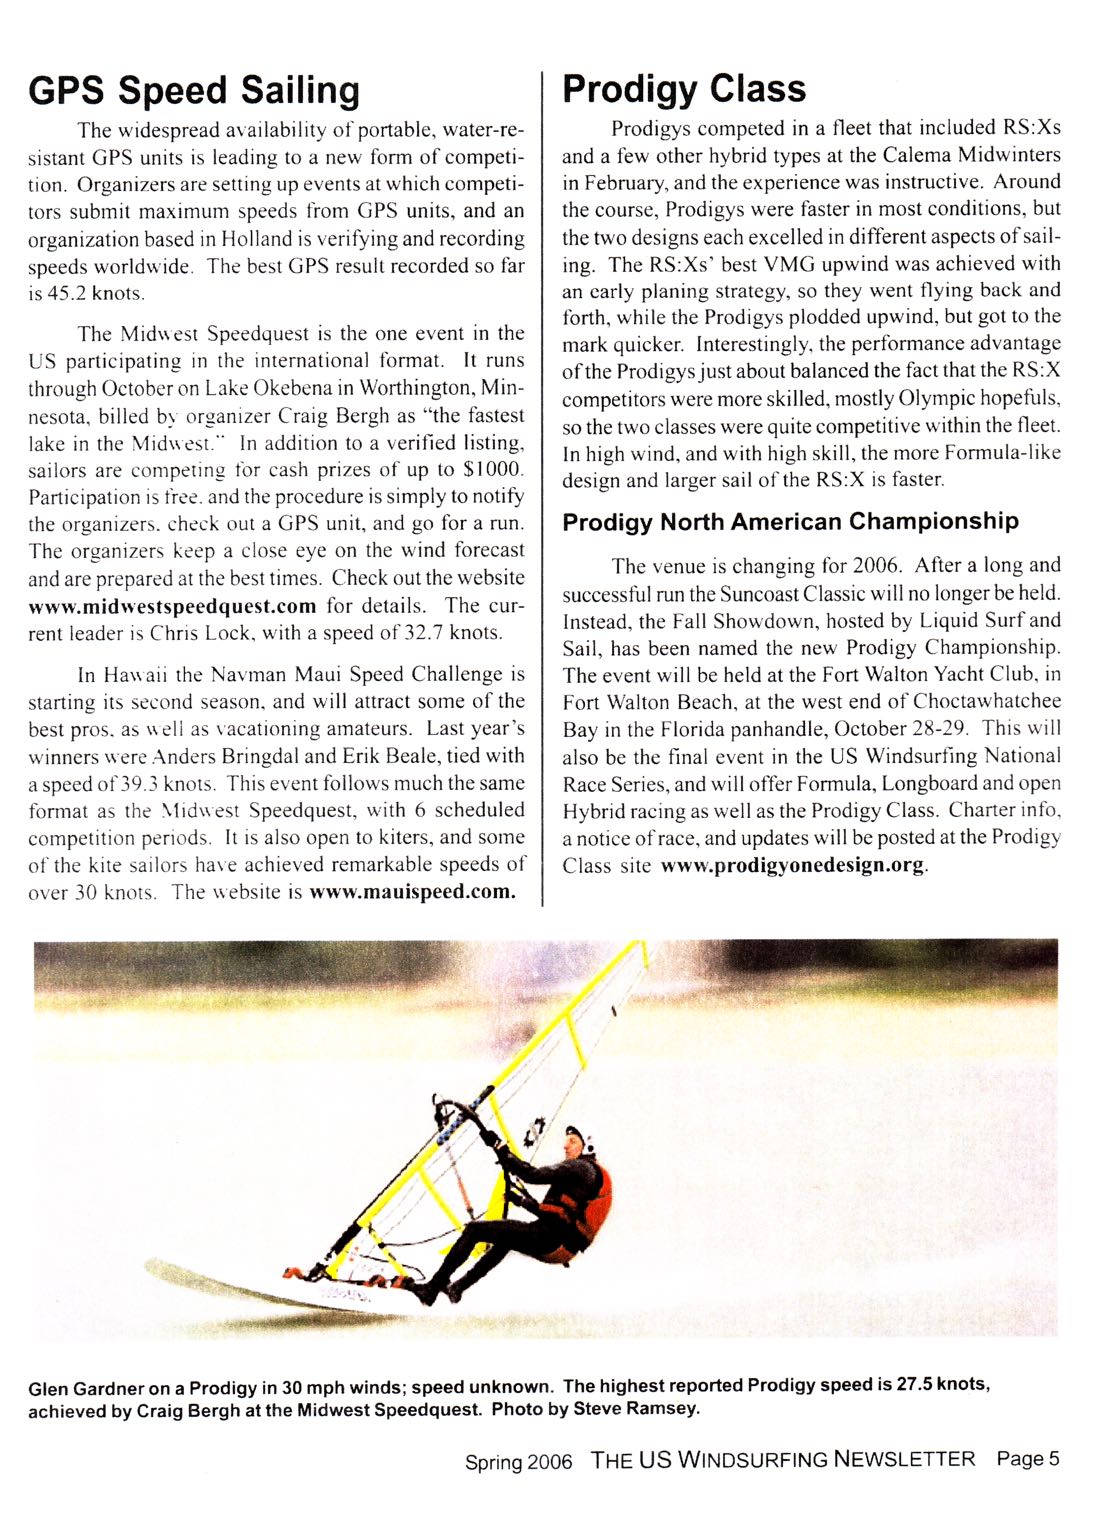 US WIndsurfing News Spring 2006 (page 5)